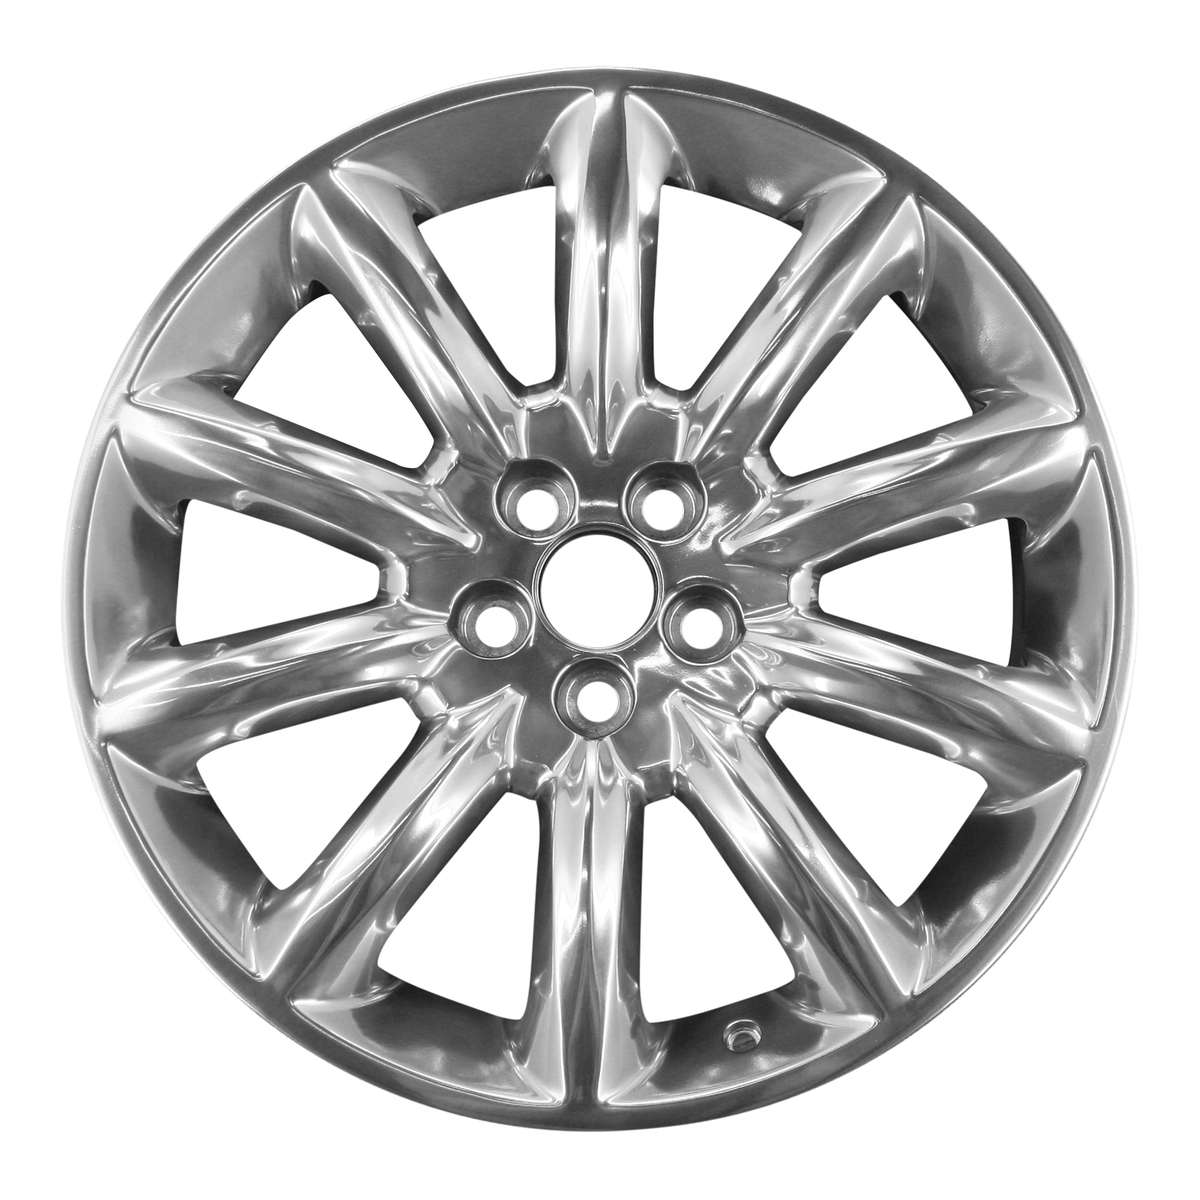 2012 Lincoln MKT 20" OEM Wheel Rim W3825P